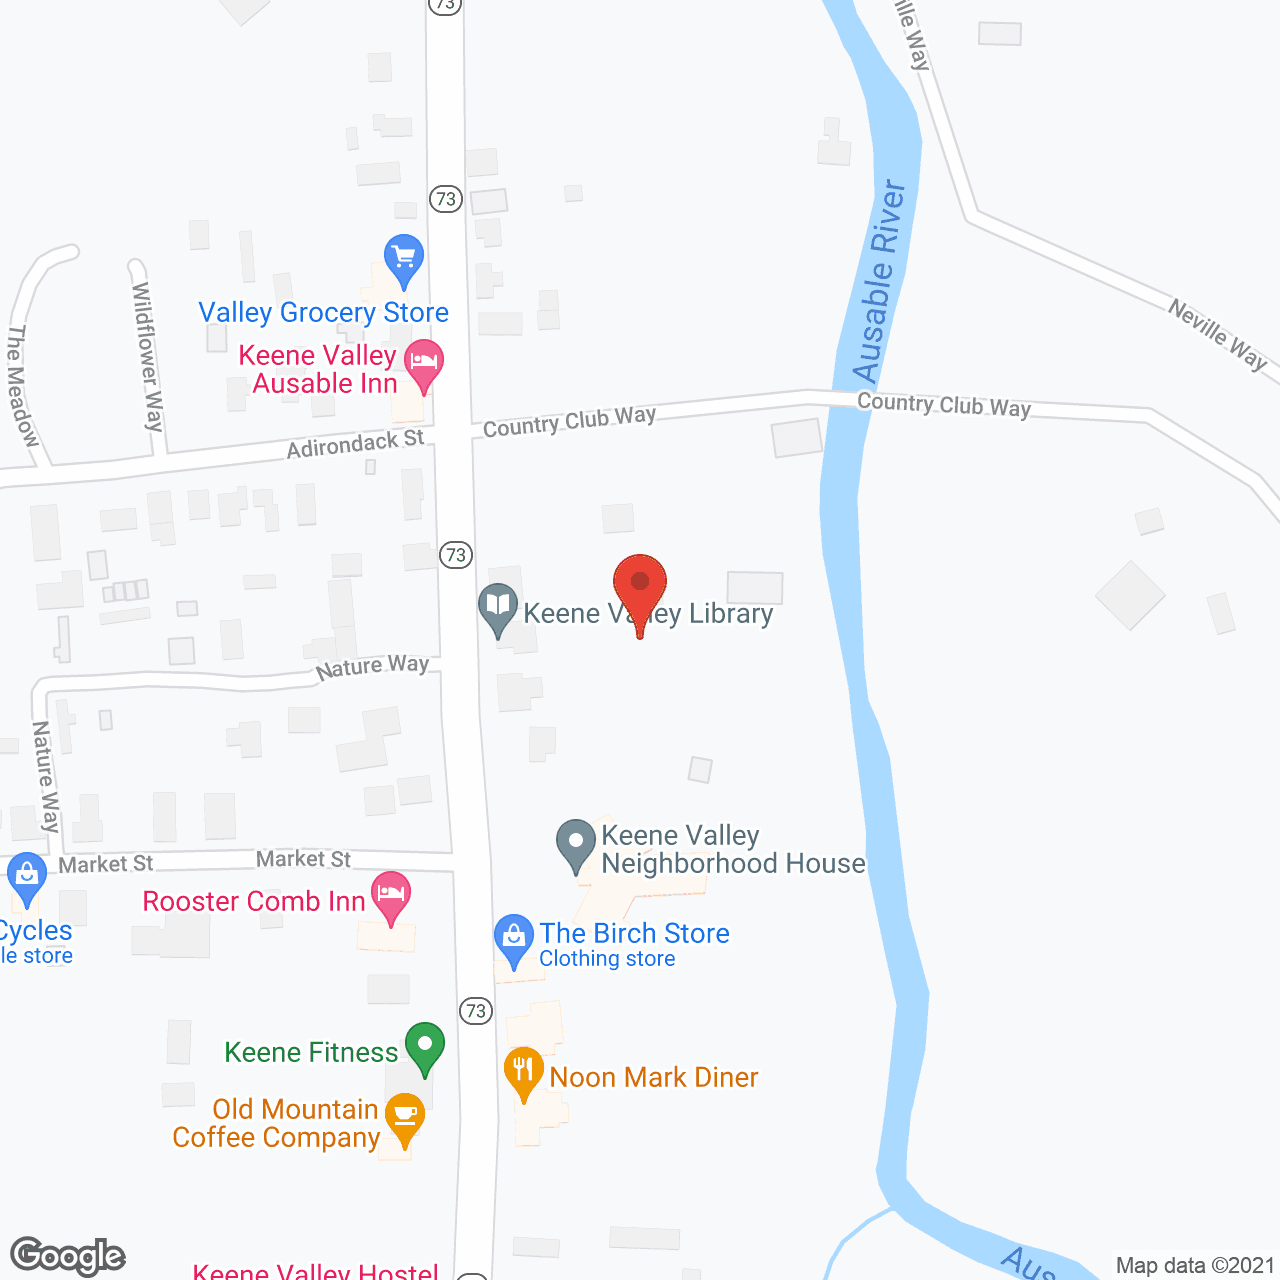 Keene Valley Neighborhood House in google map